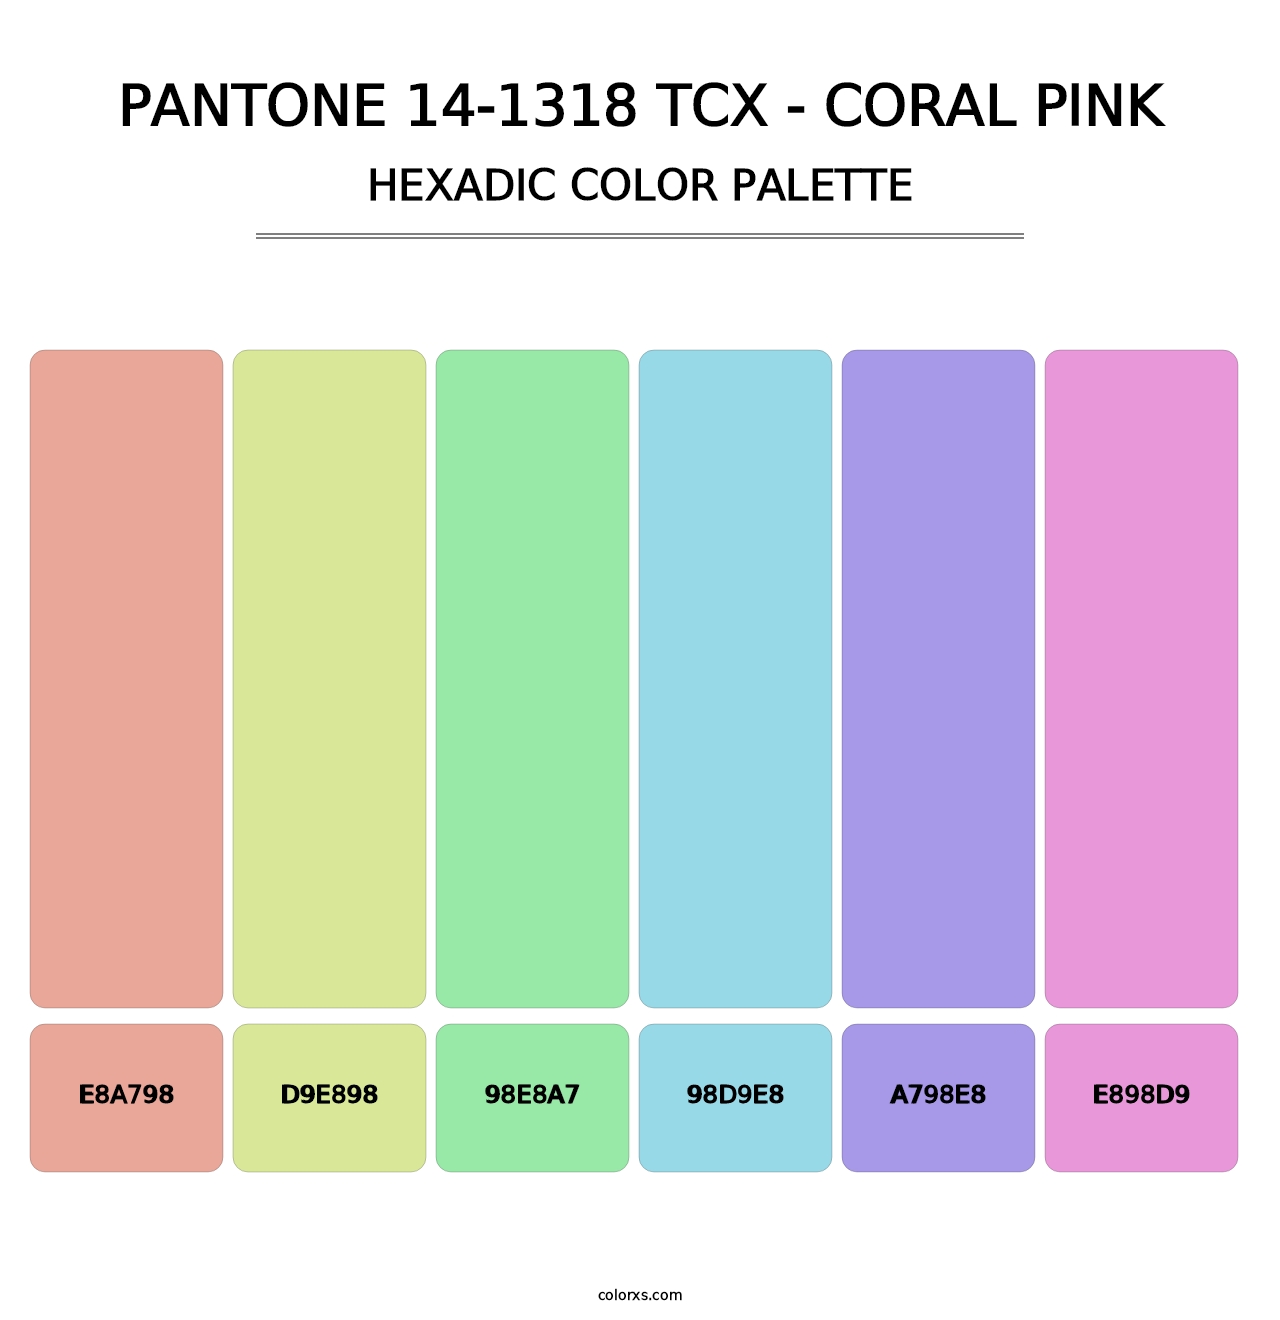 PANTONE 14-1318 TCX - Coral Pink - Hexadic Color Palette